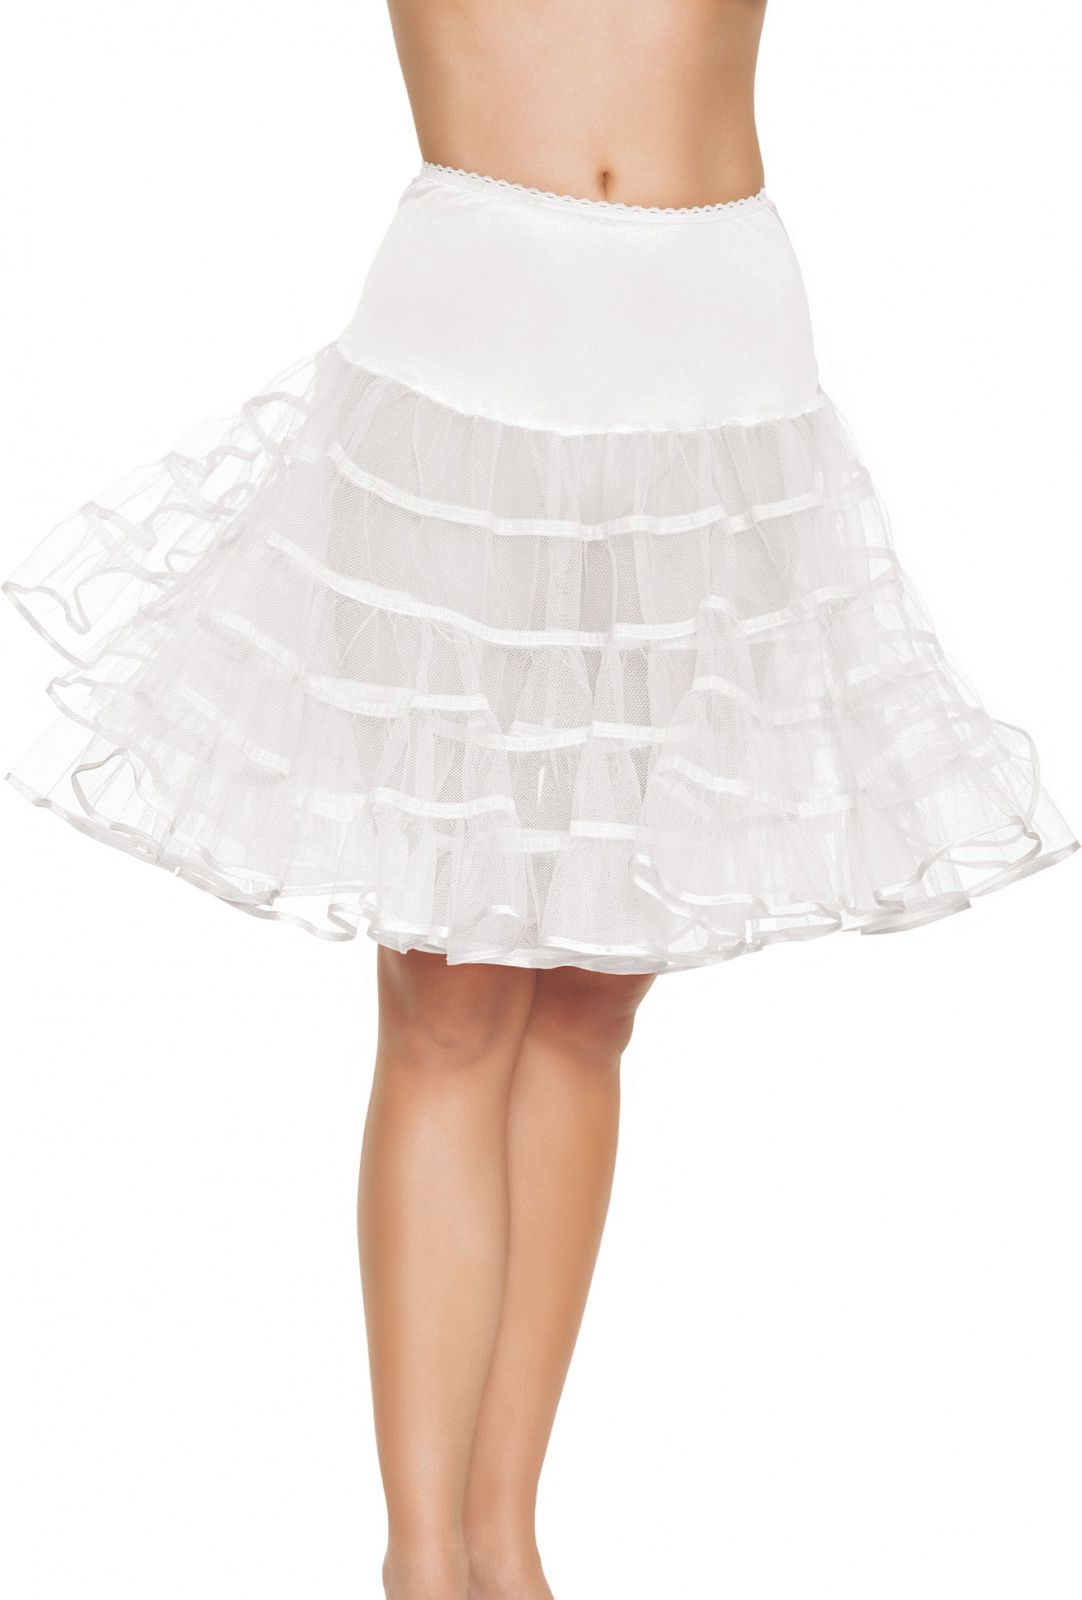 Witte luxe petticoat